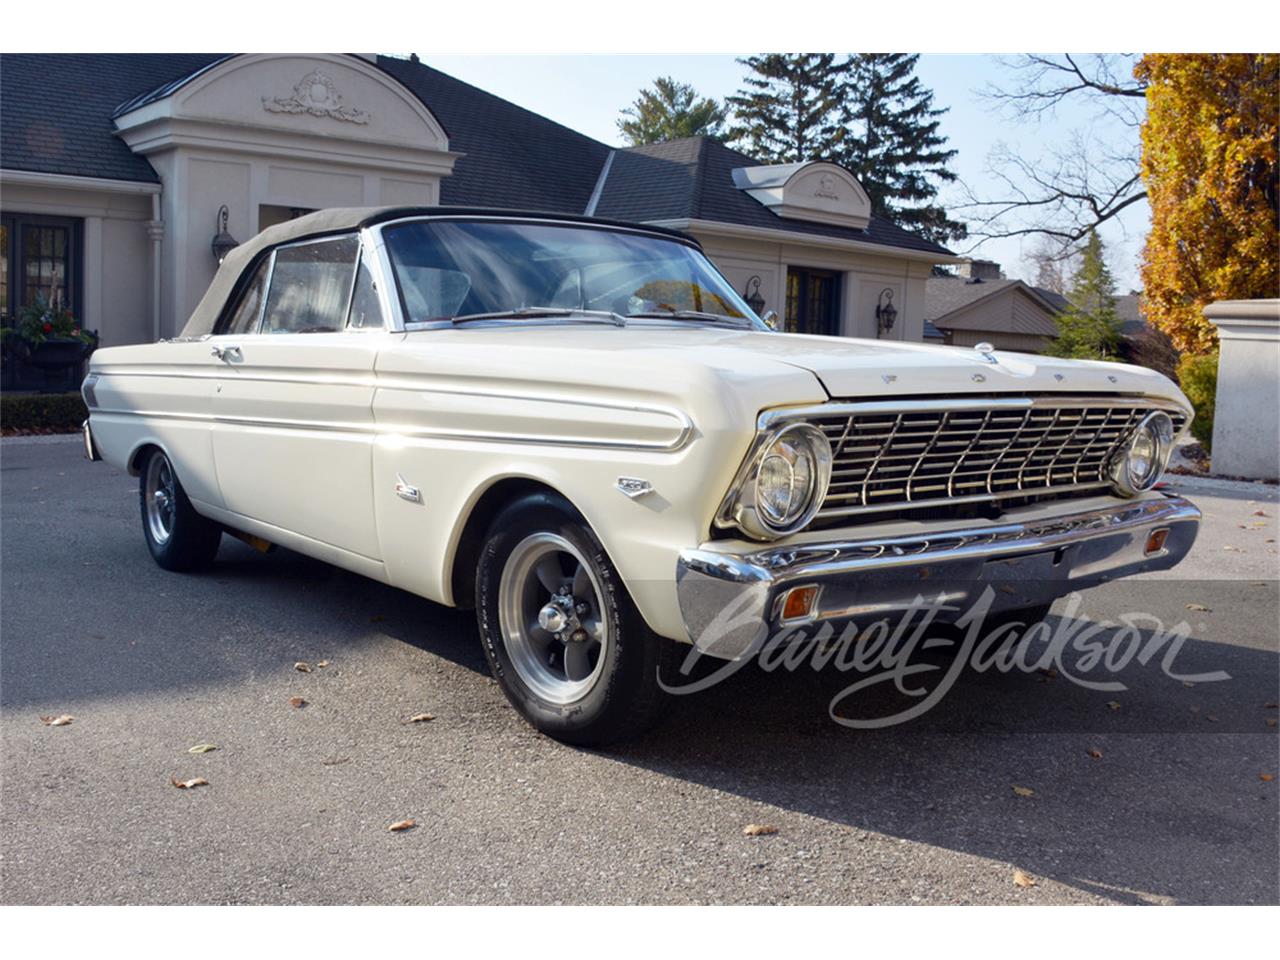 1964 Ford Falcon for Sale | ClassicCars.com | CC-1807888